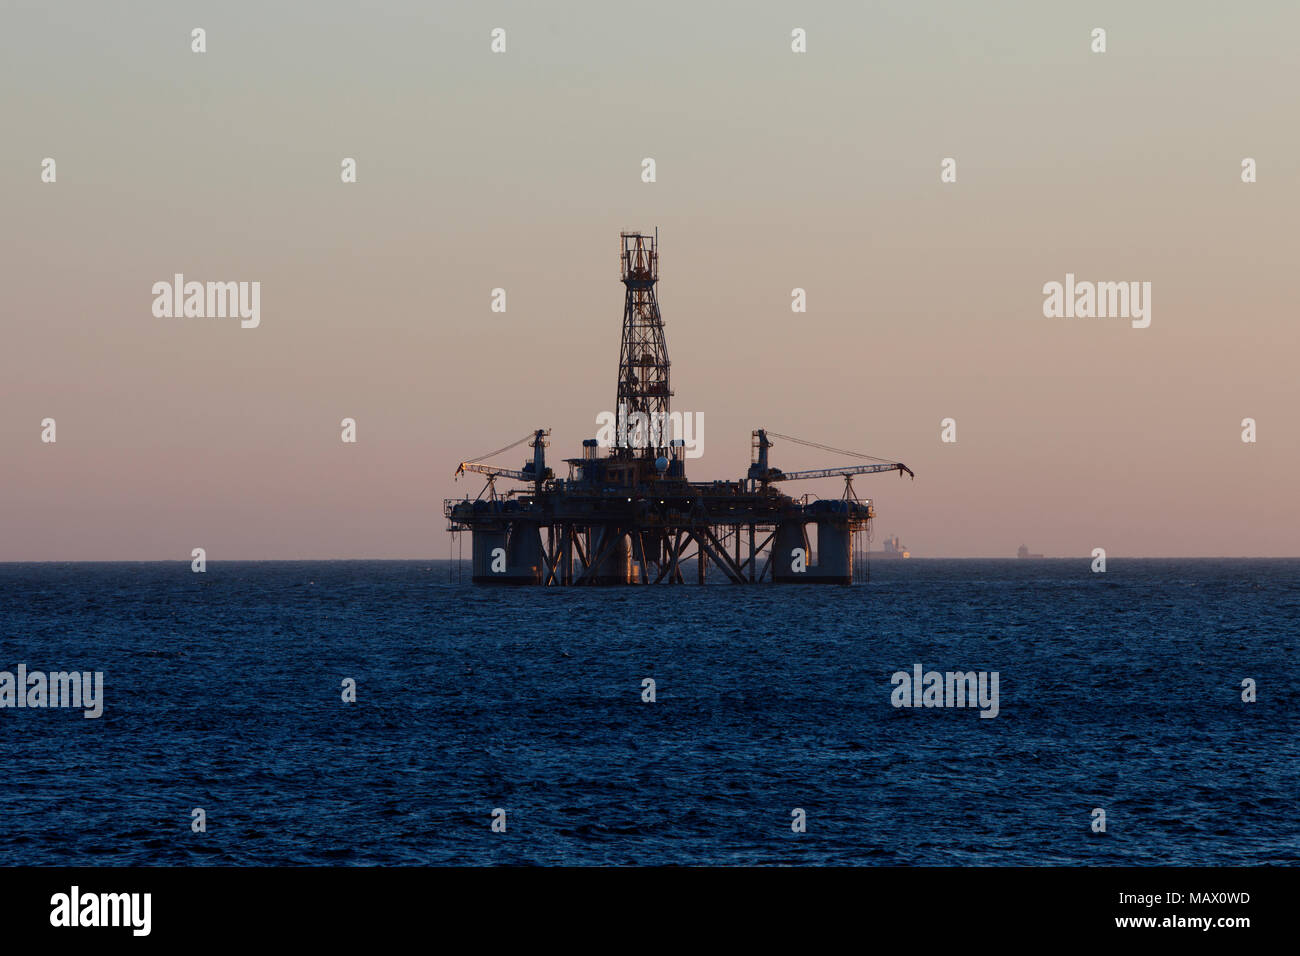 Offshore Drilling Platform Data: 20/02/13 Local: Niterói, RJ Autor: Eduardo Zappia Stock Photo